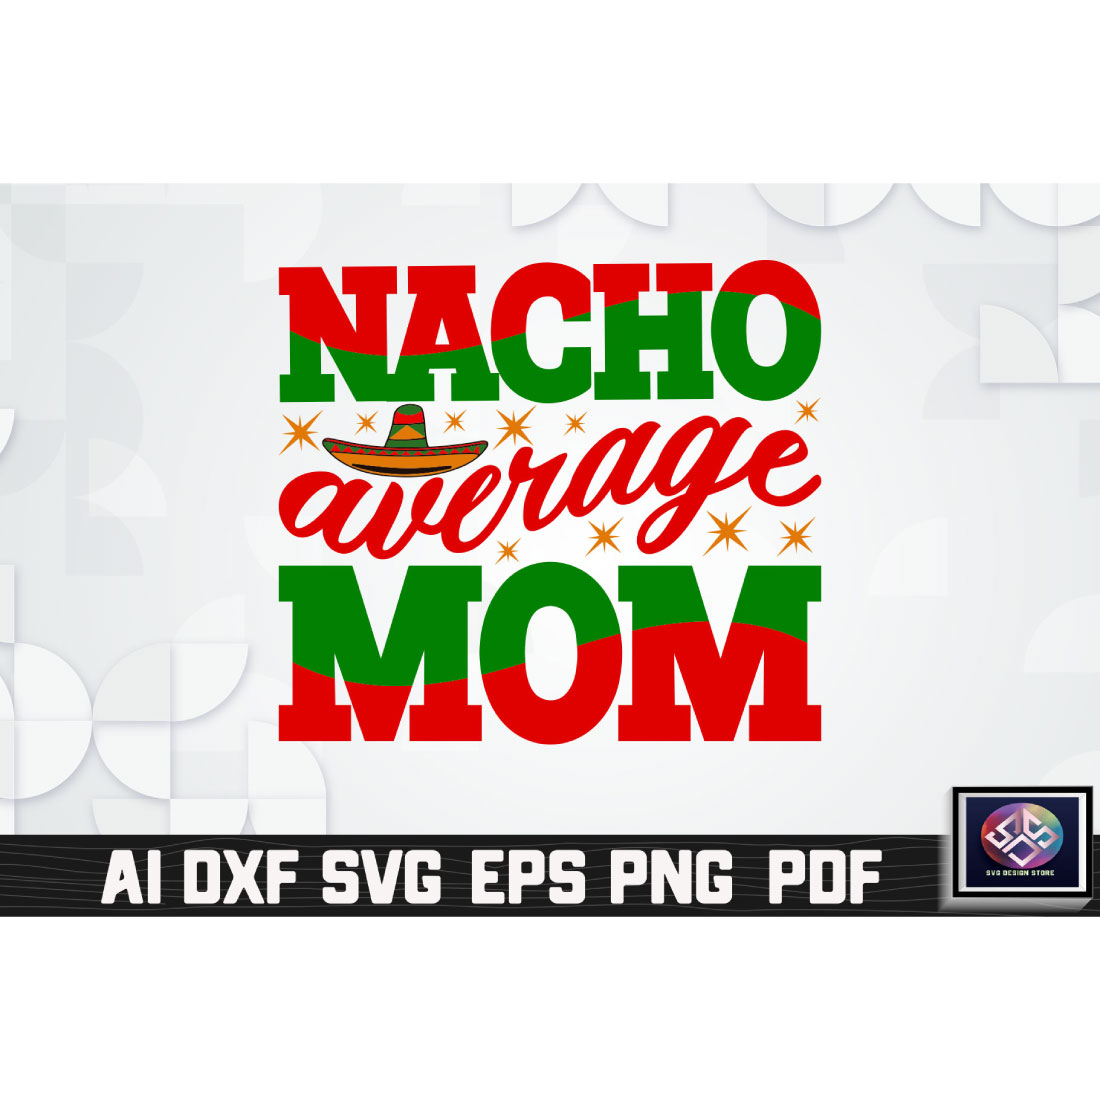 Nacho Average Mom cover image.